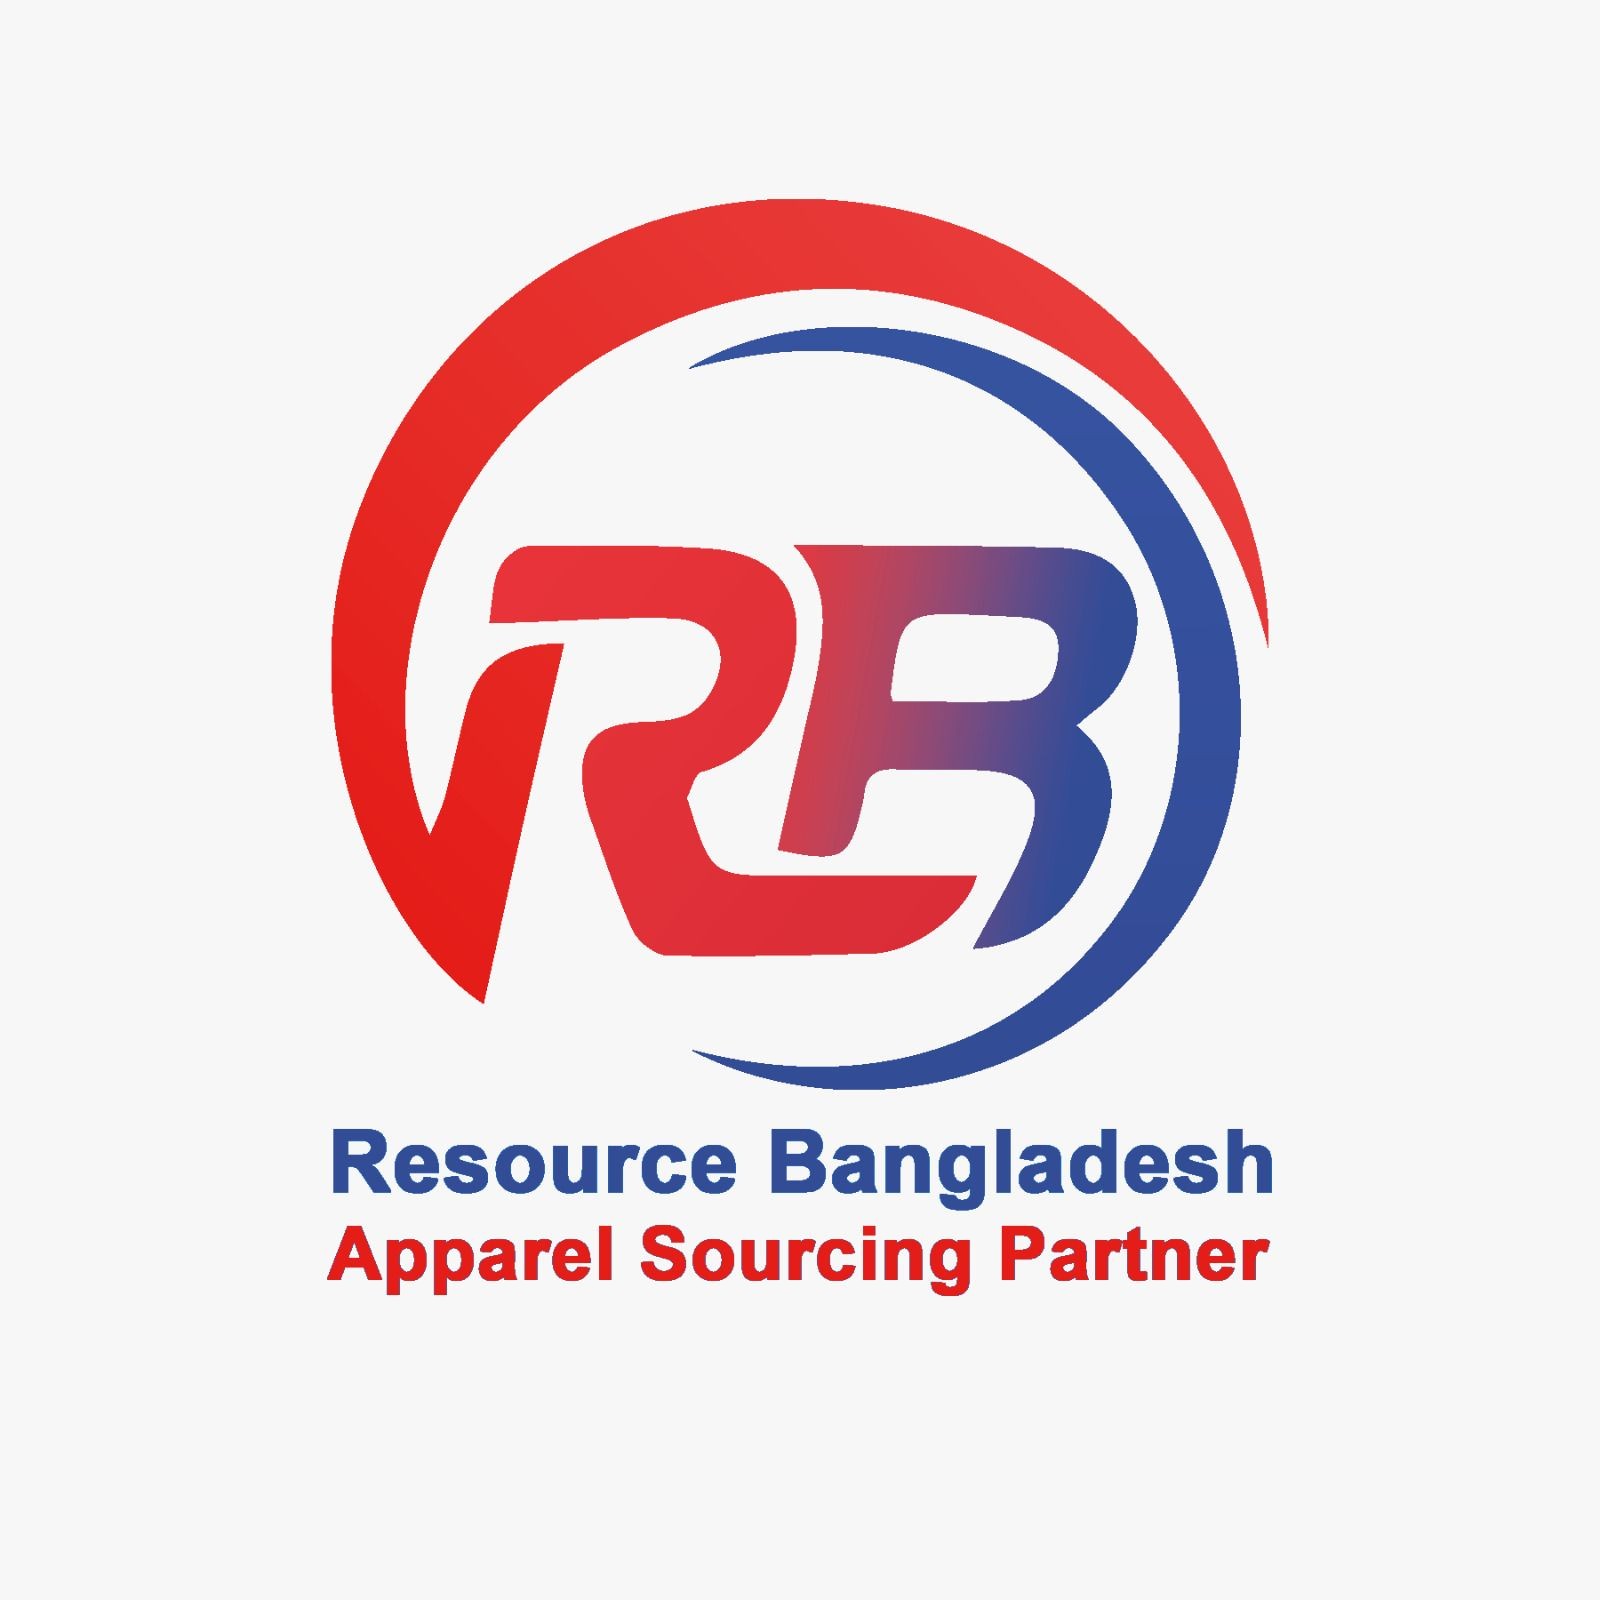 Resource Bangladesh